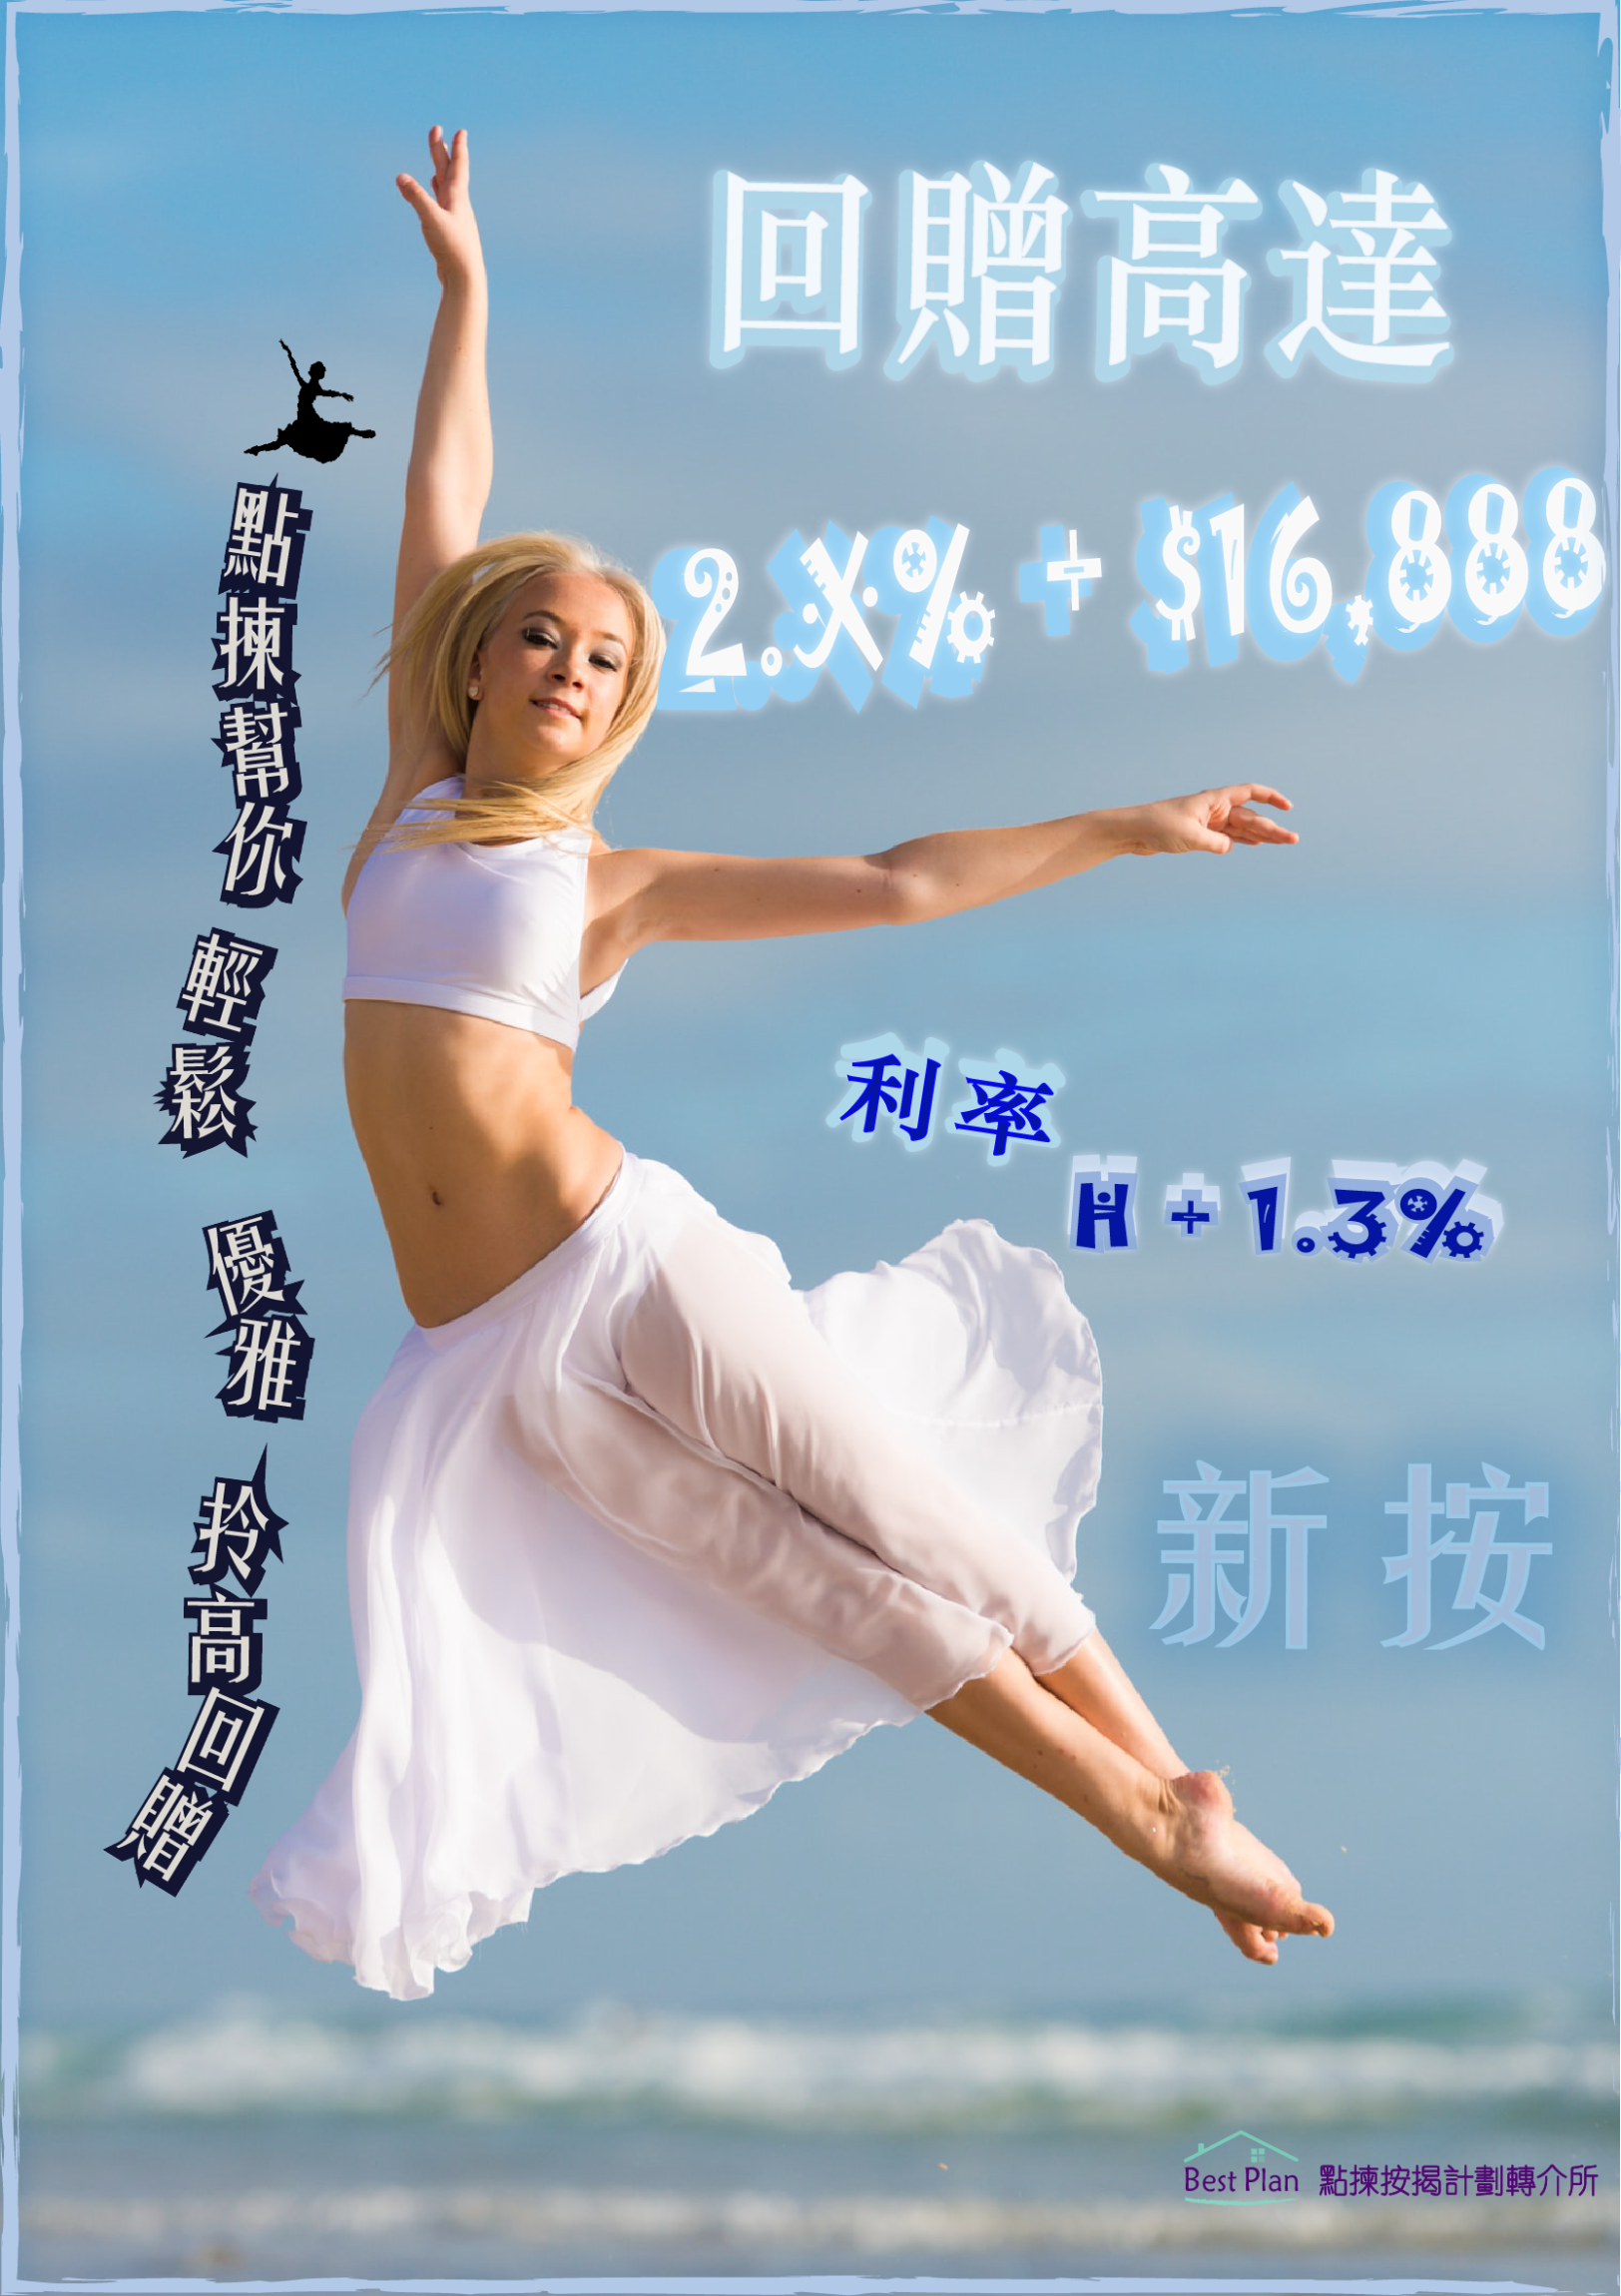 本頁圖片/檔案 - Dancer_New_2.x+16,888 (s 1.2x1.7)